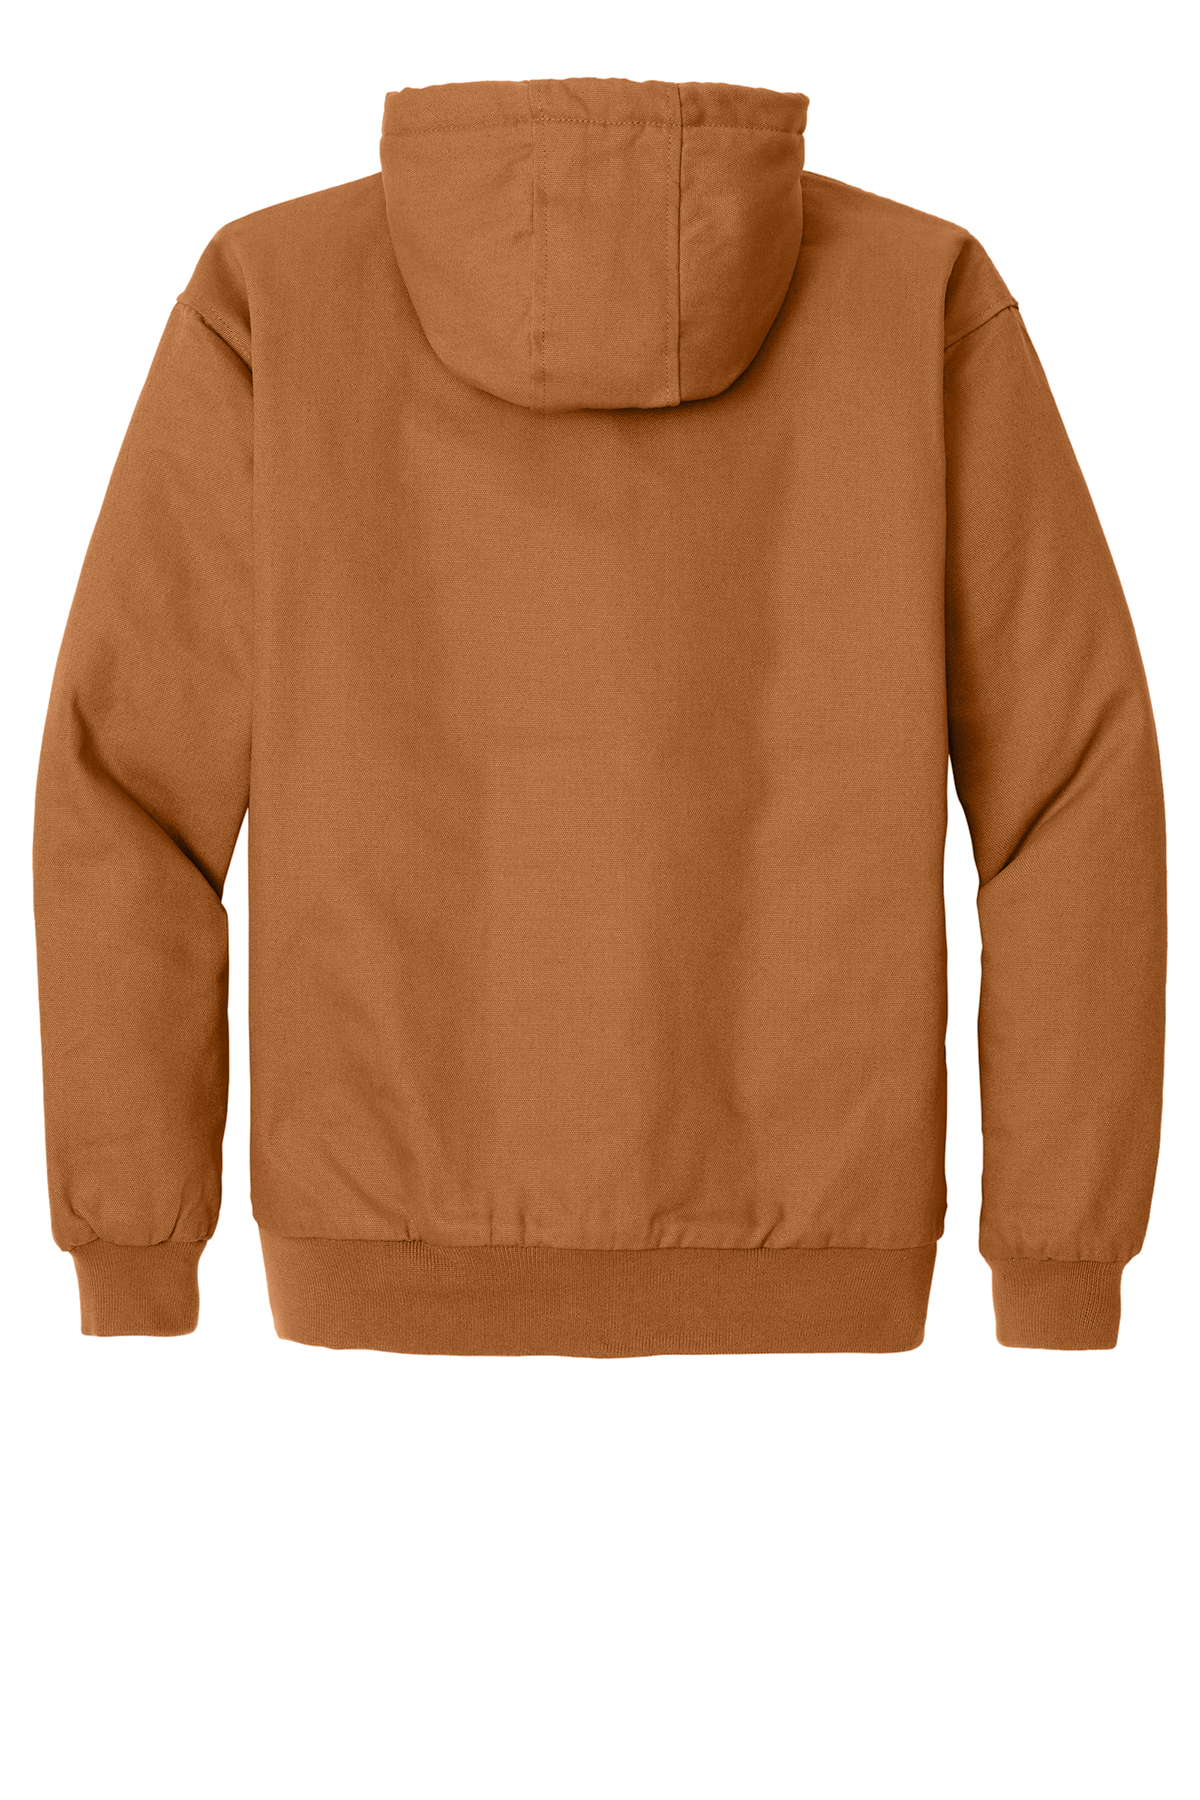 Cornerstone Duck Cloth Hooded Work Jacket - The Monogram Company